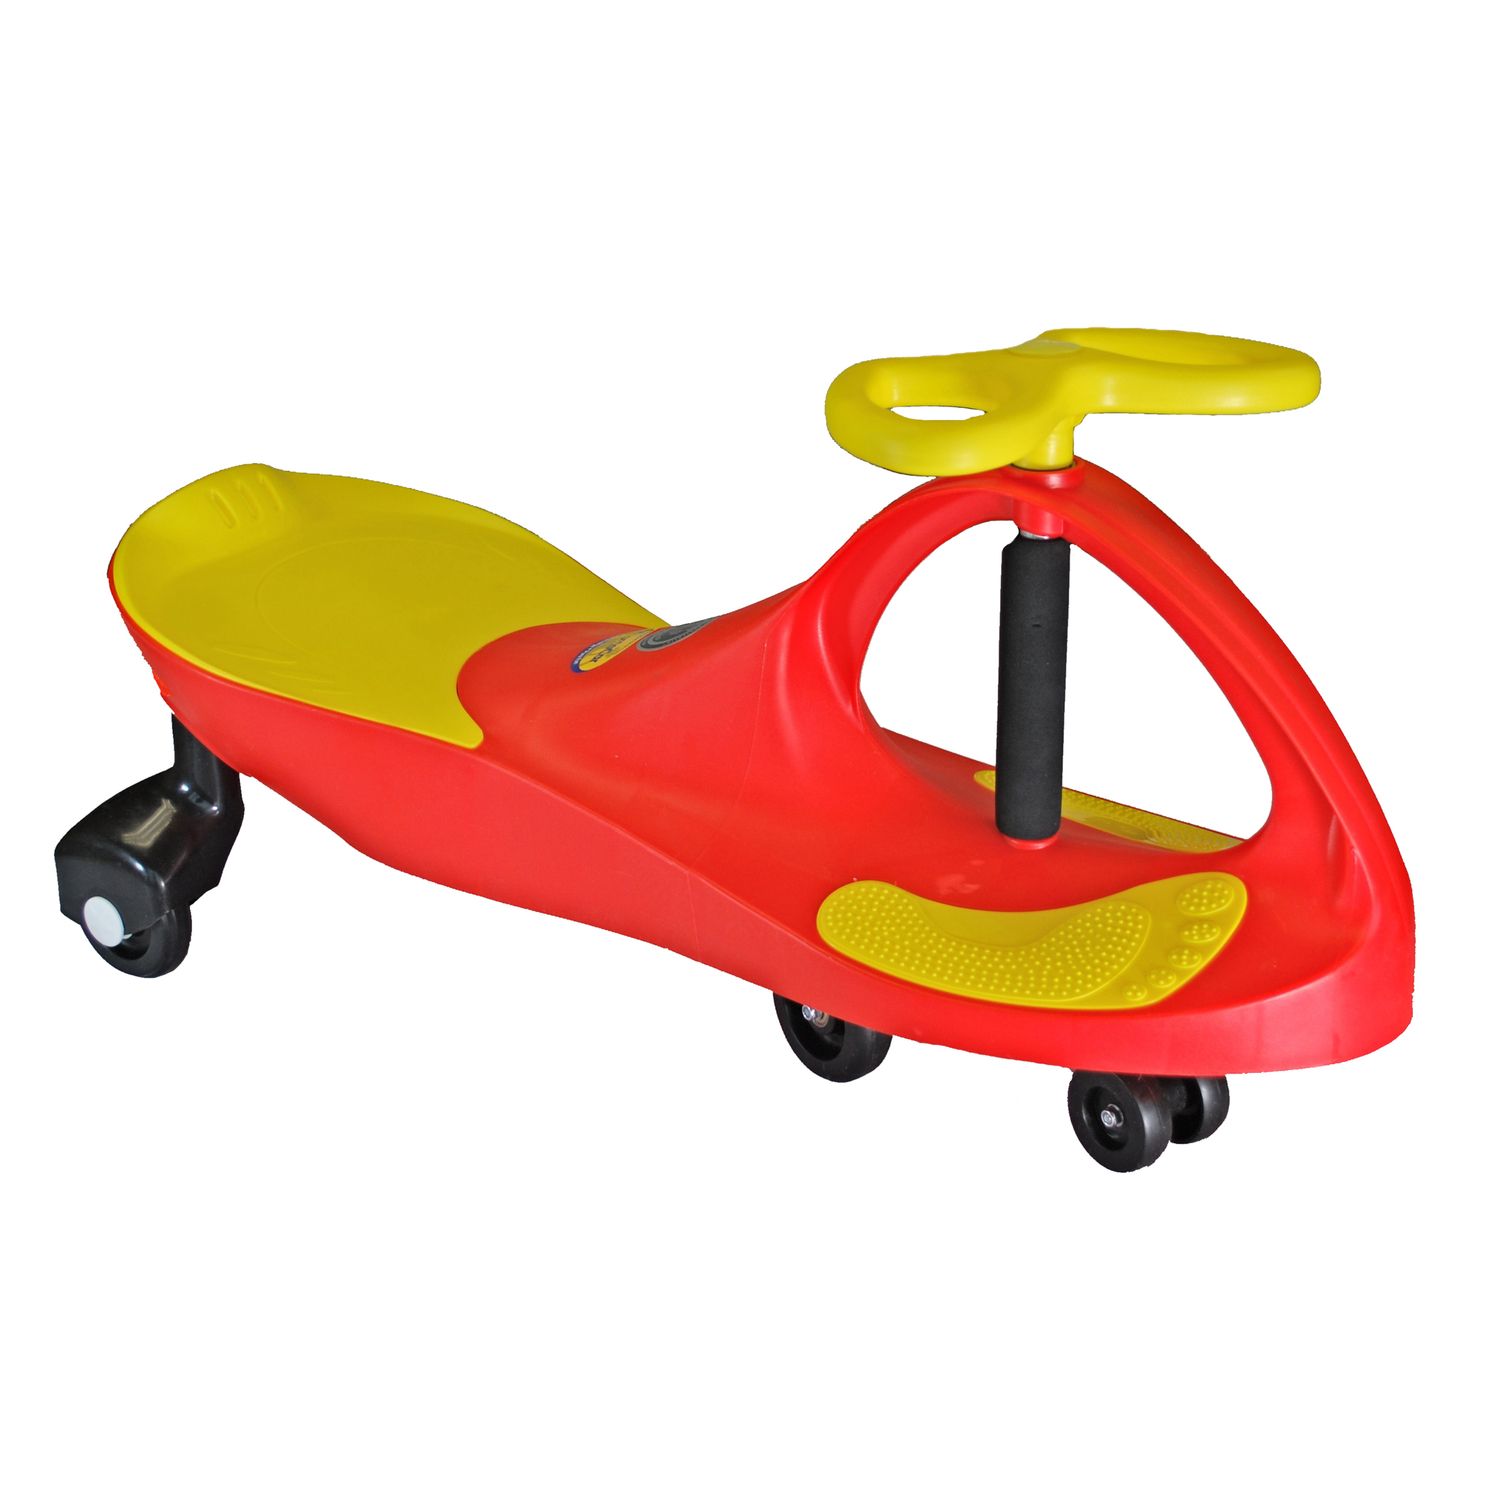 PlasmaCar Ride-On Toy Vehicle